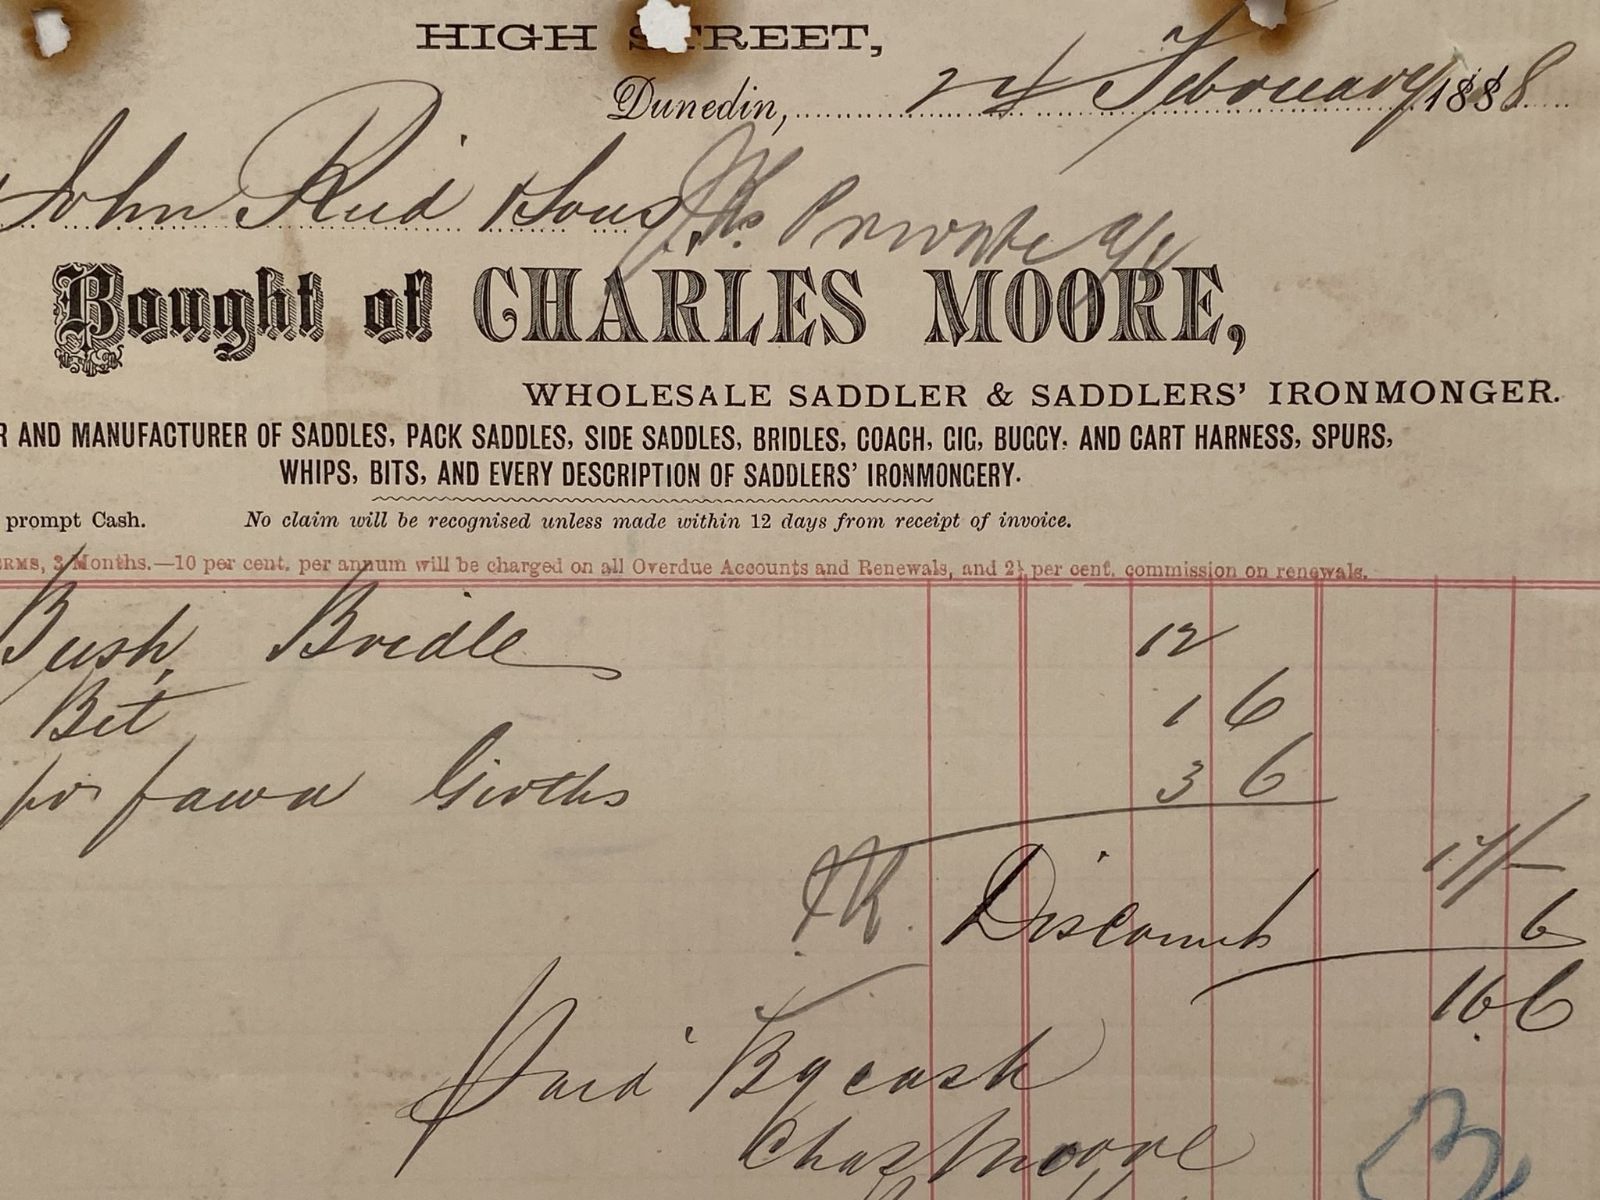 ANTIQUE INVOICE / RECEIPT: Charles Moore, Dunedin – Wholesale Saddler 1888